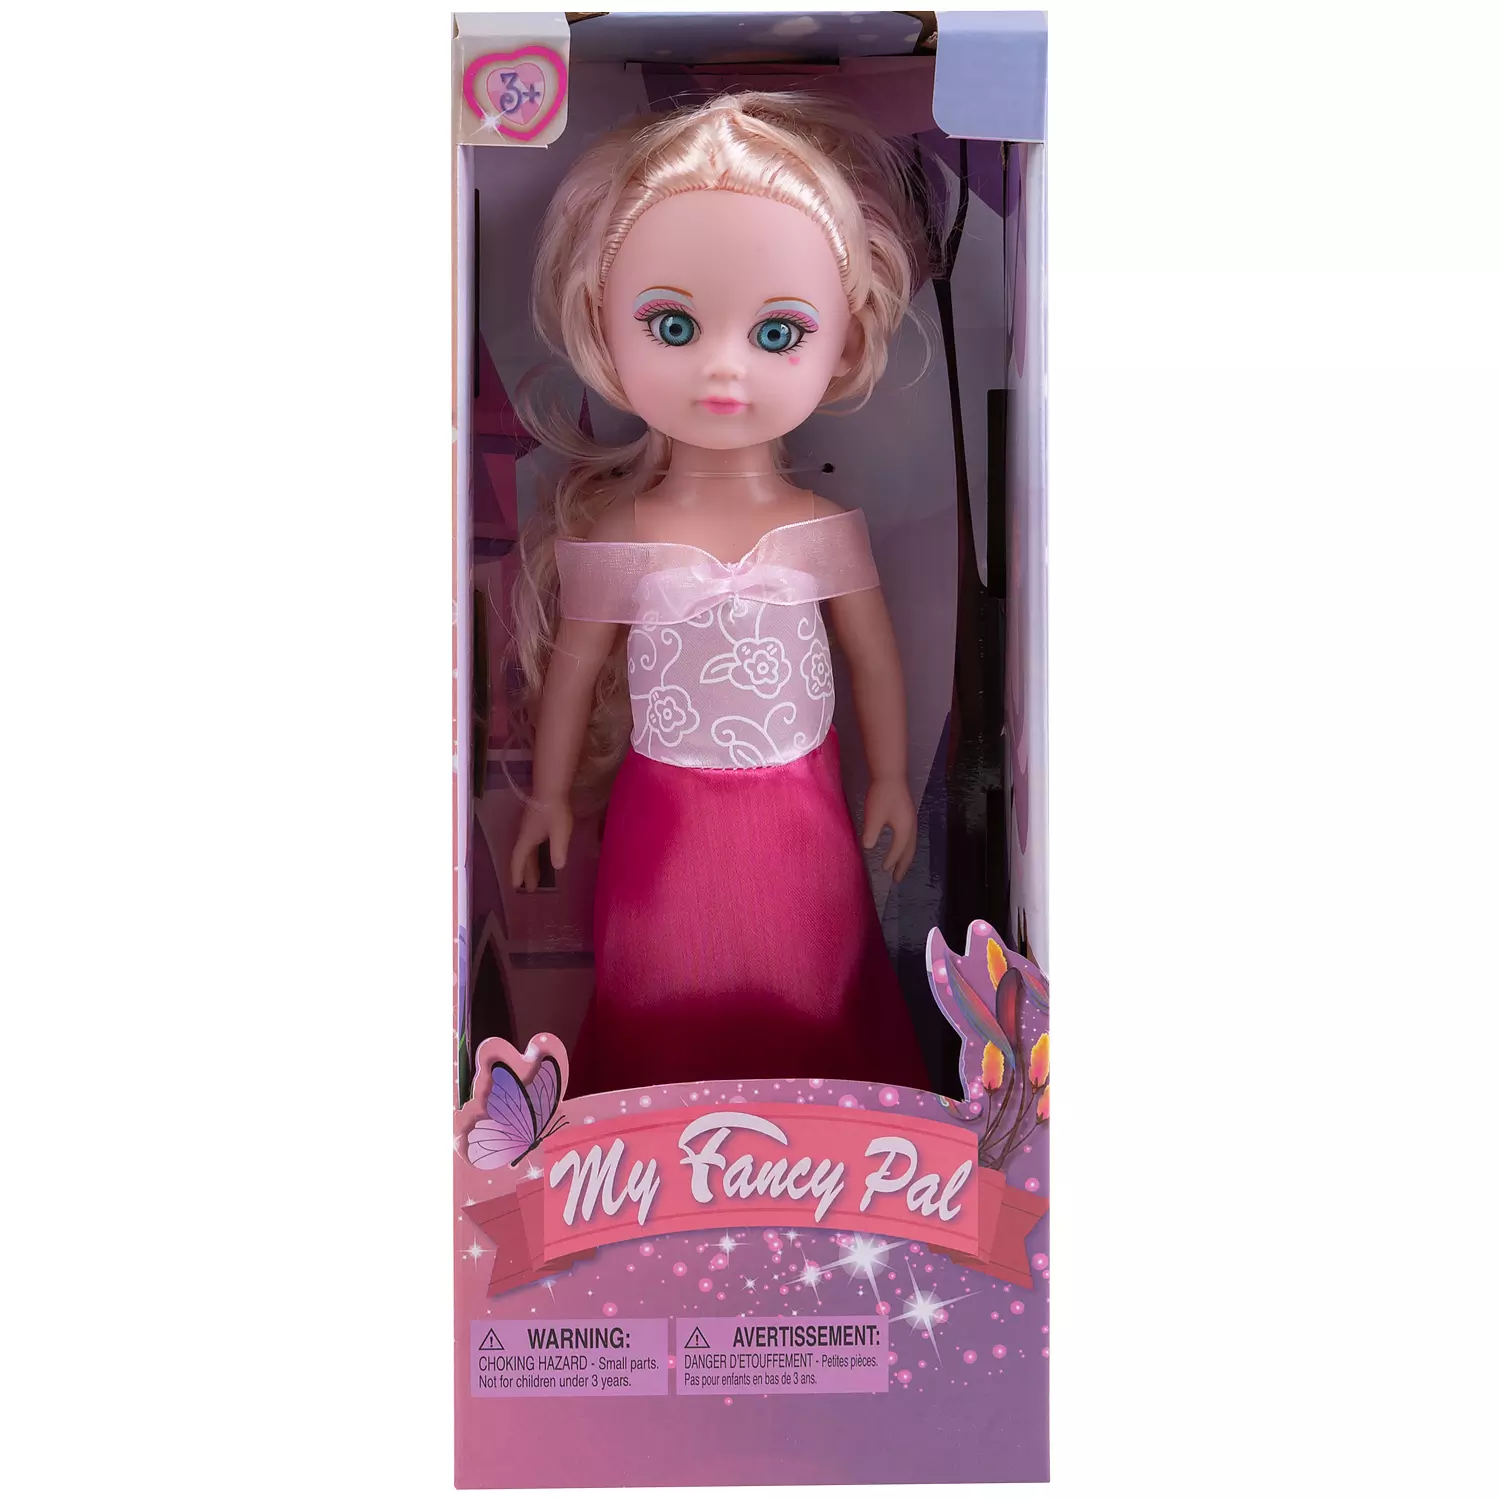 My Fancy Pal princess doll, Rose